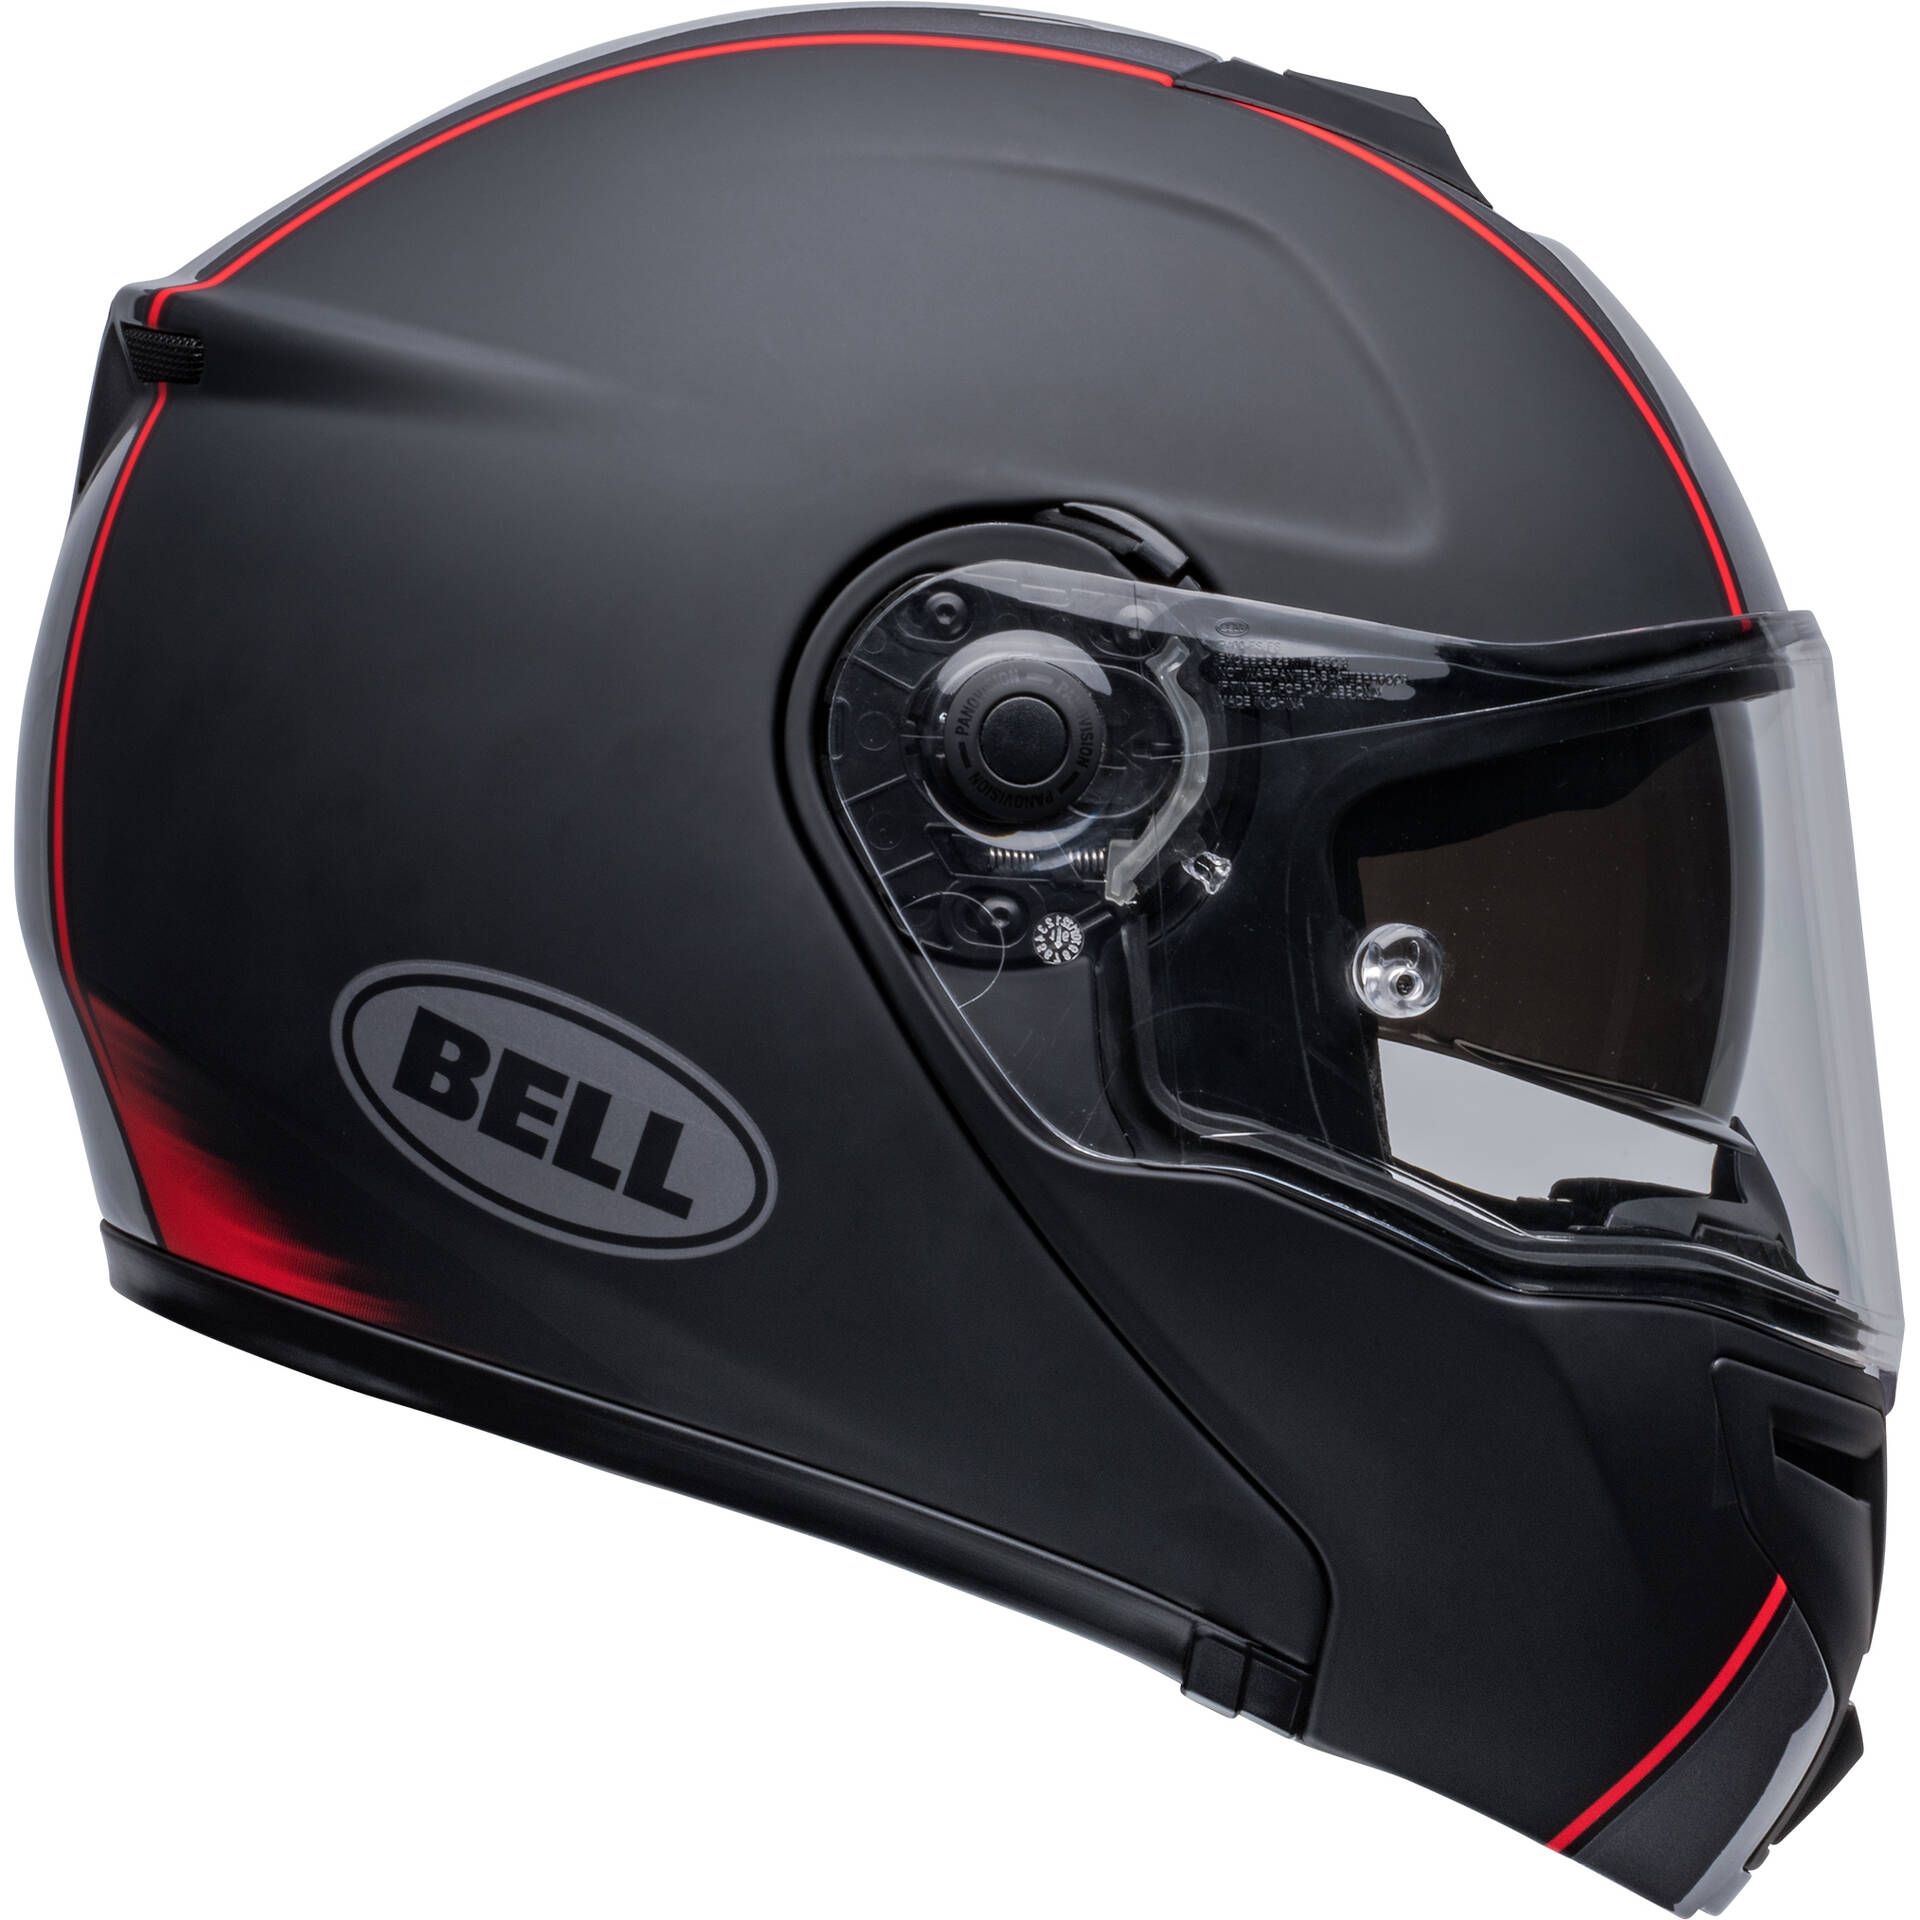 Size X-Large Solid Black Bell Srt Modular Helmet 